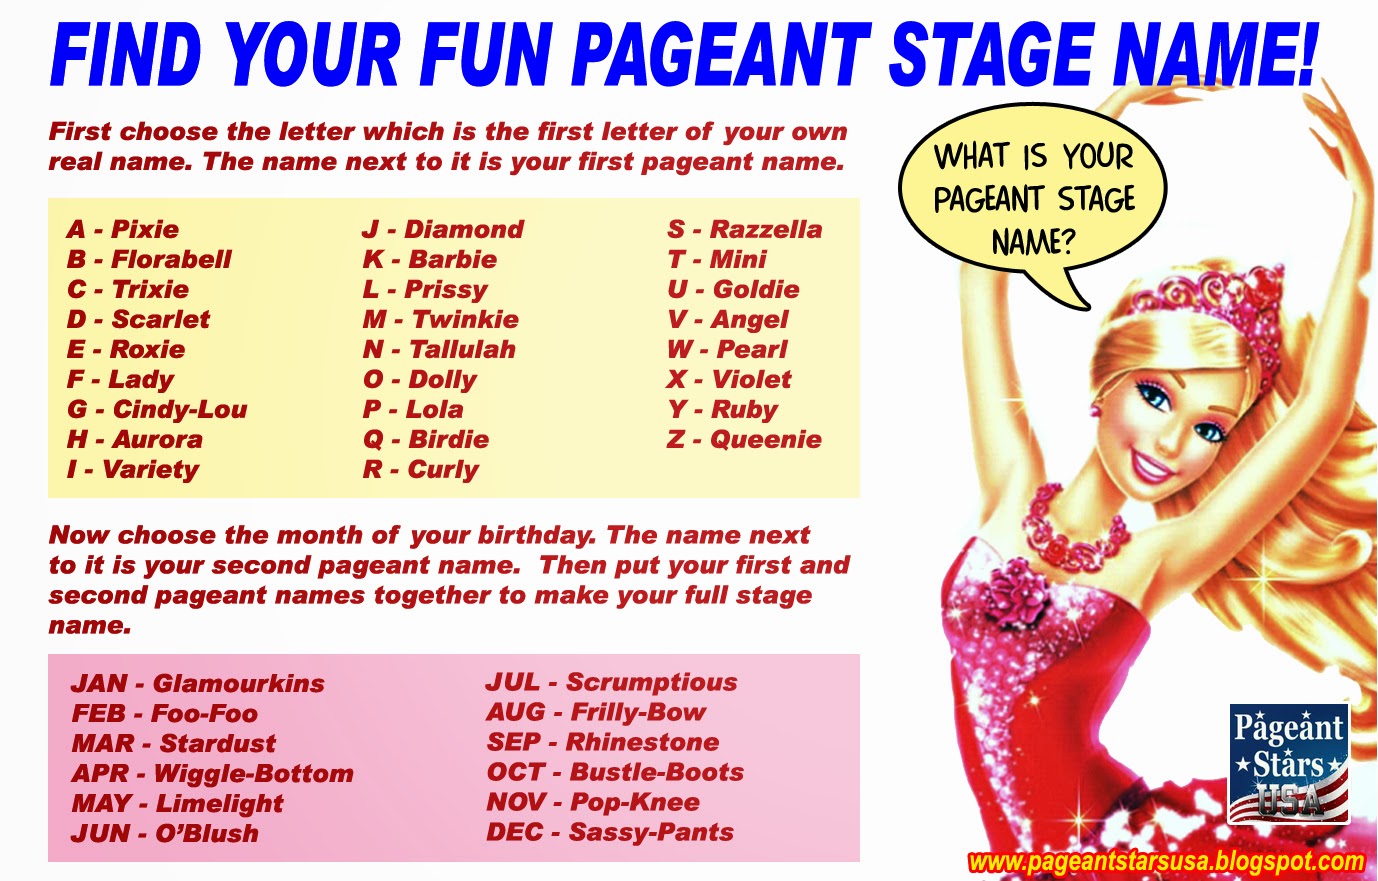 Pageant перевод. Анекдоты про Барби. Pixie_Barbie. Beauty Pageant перевод. Fun page